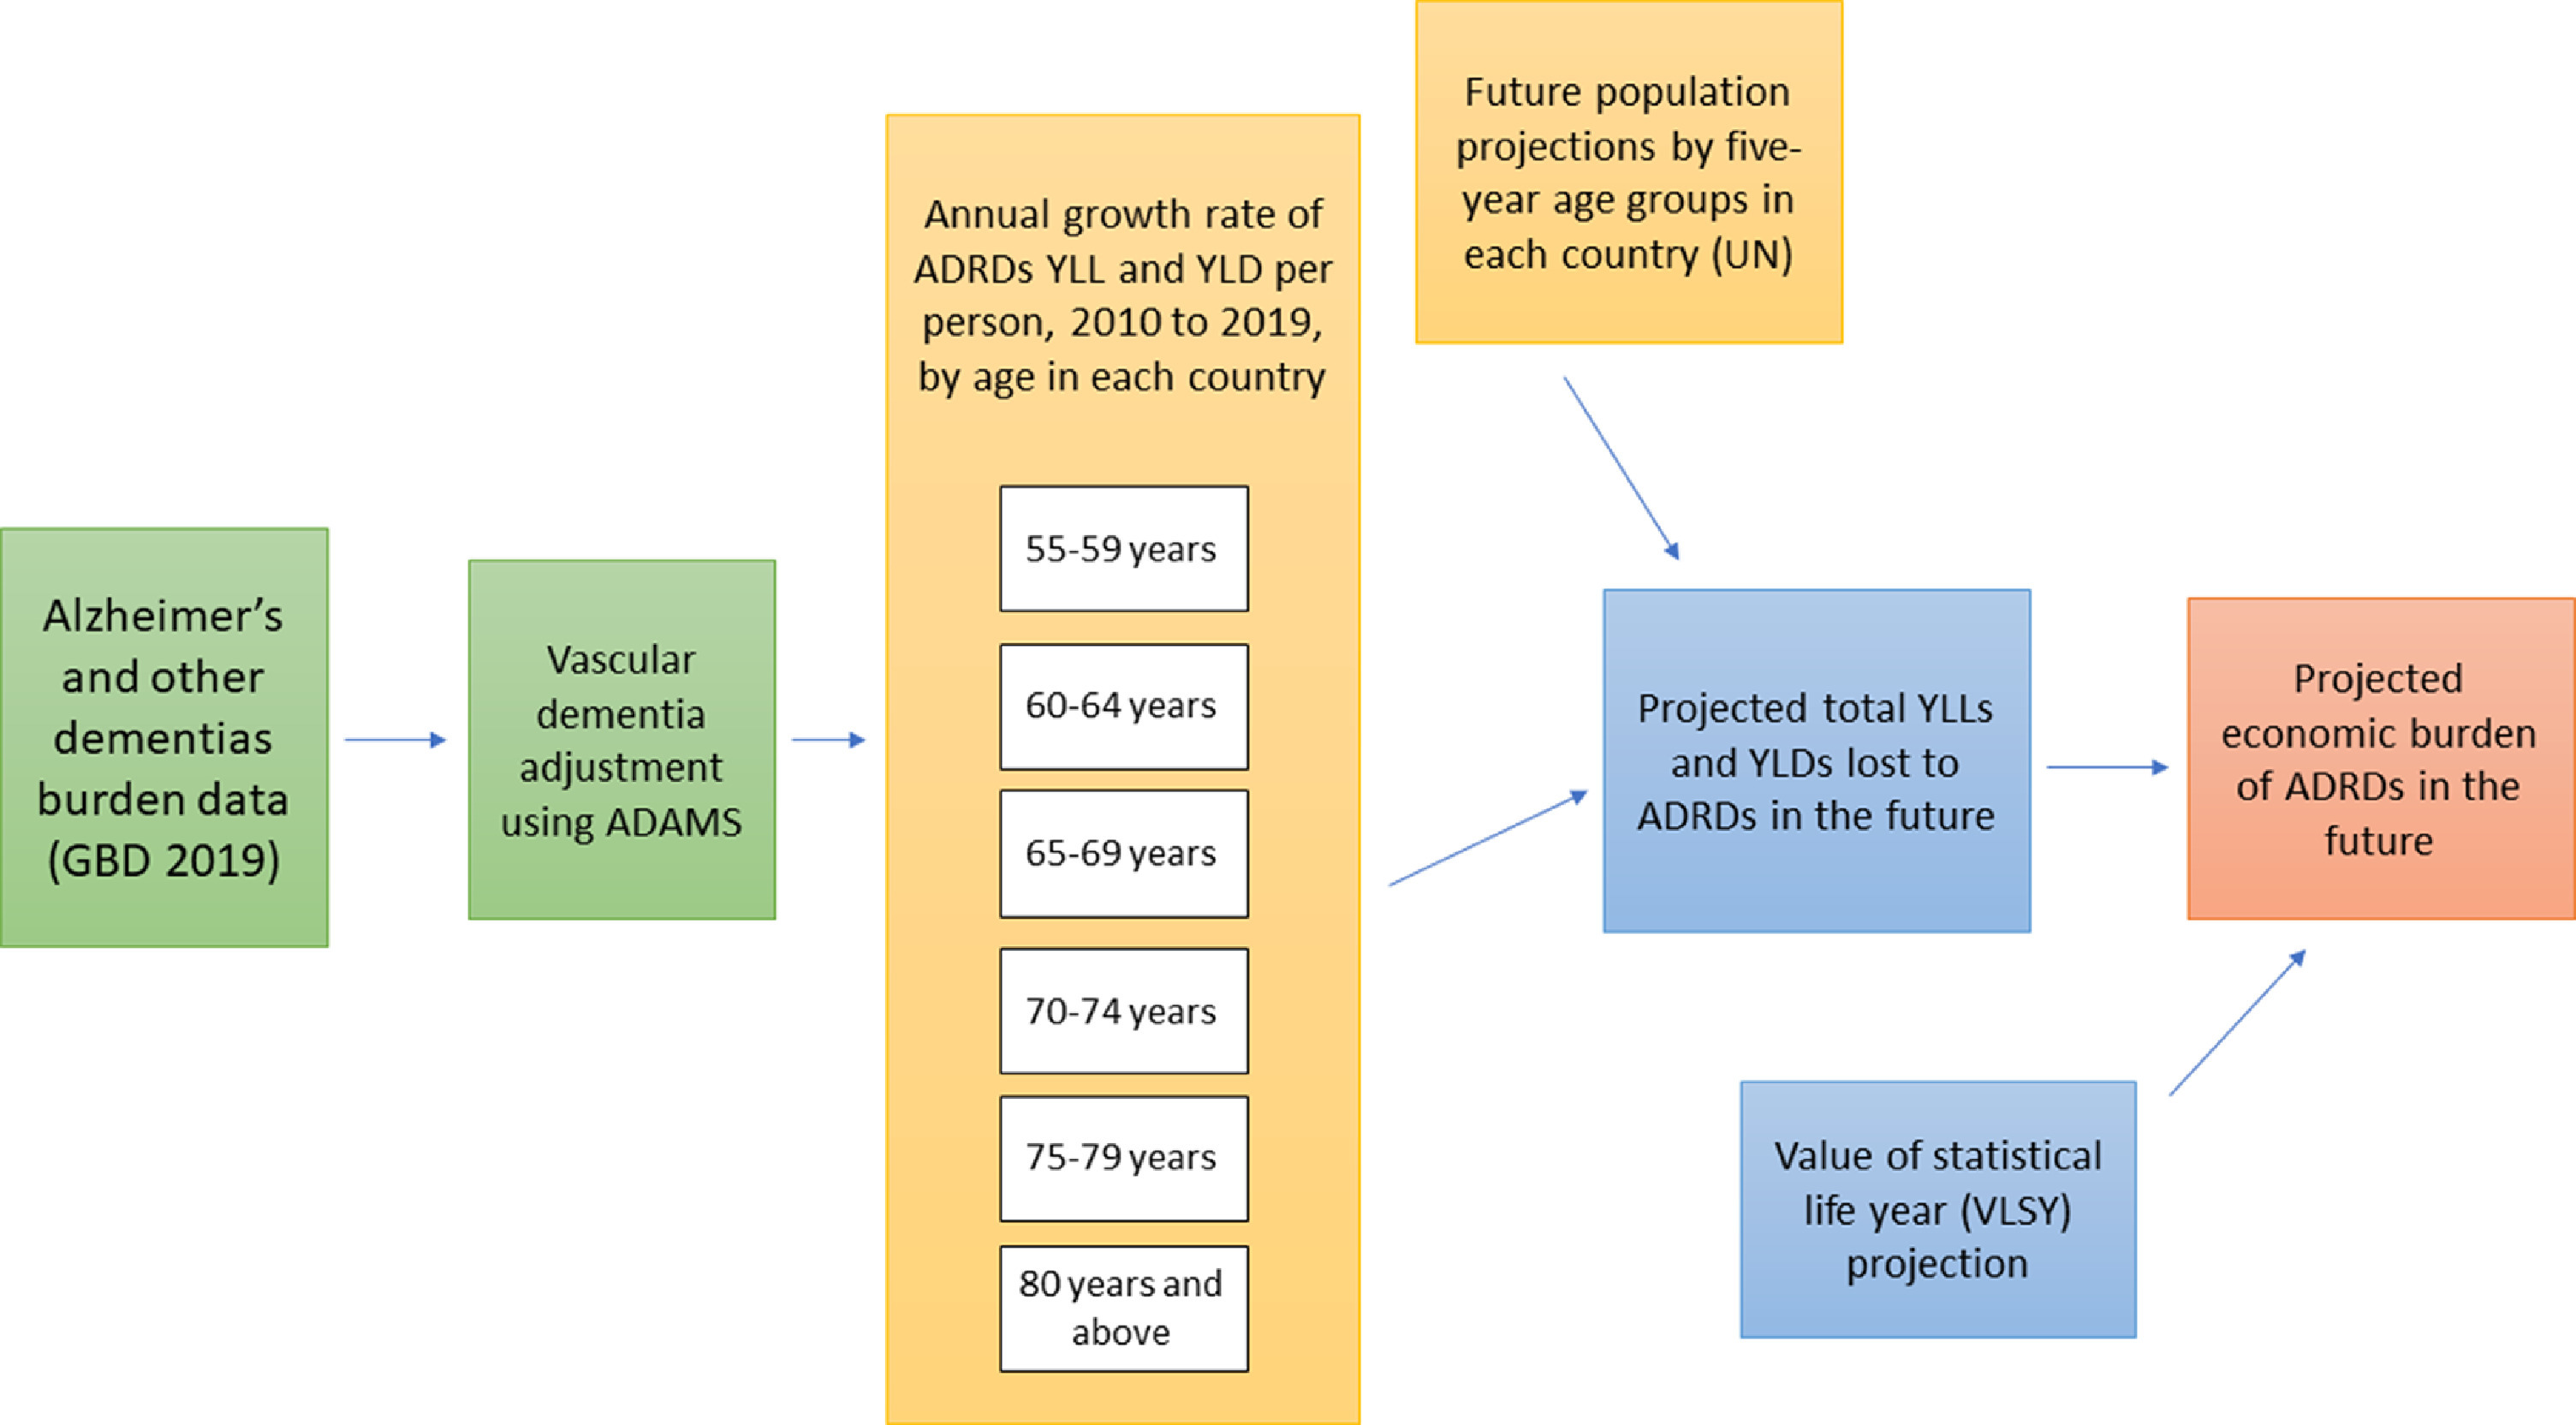 Methodological summary for projecting future VSL-based economic burden of ADRDs (Model 1).